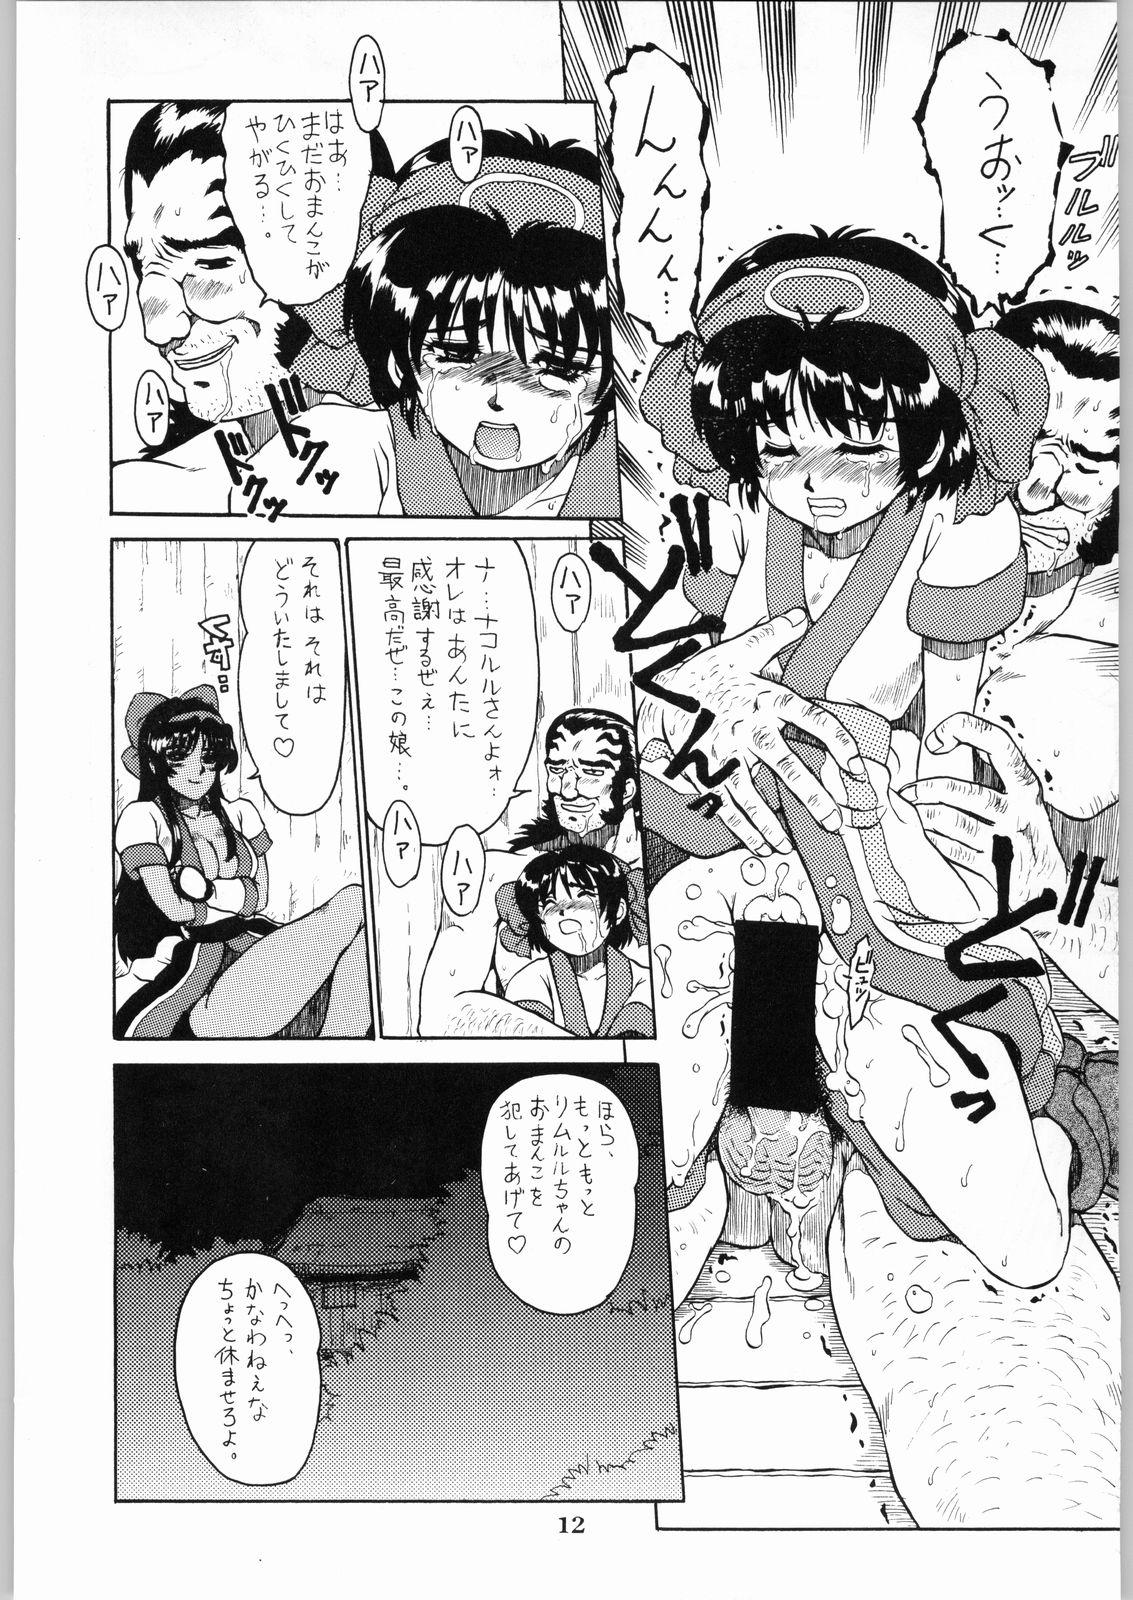 Hot Pussy Shikiyoku Hokkedan 9 - Samurai spirits English - Page 12